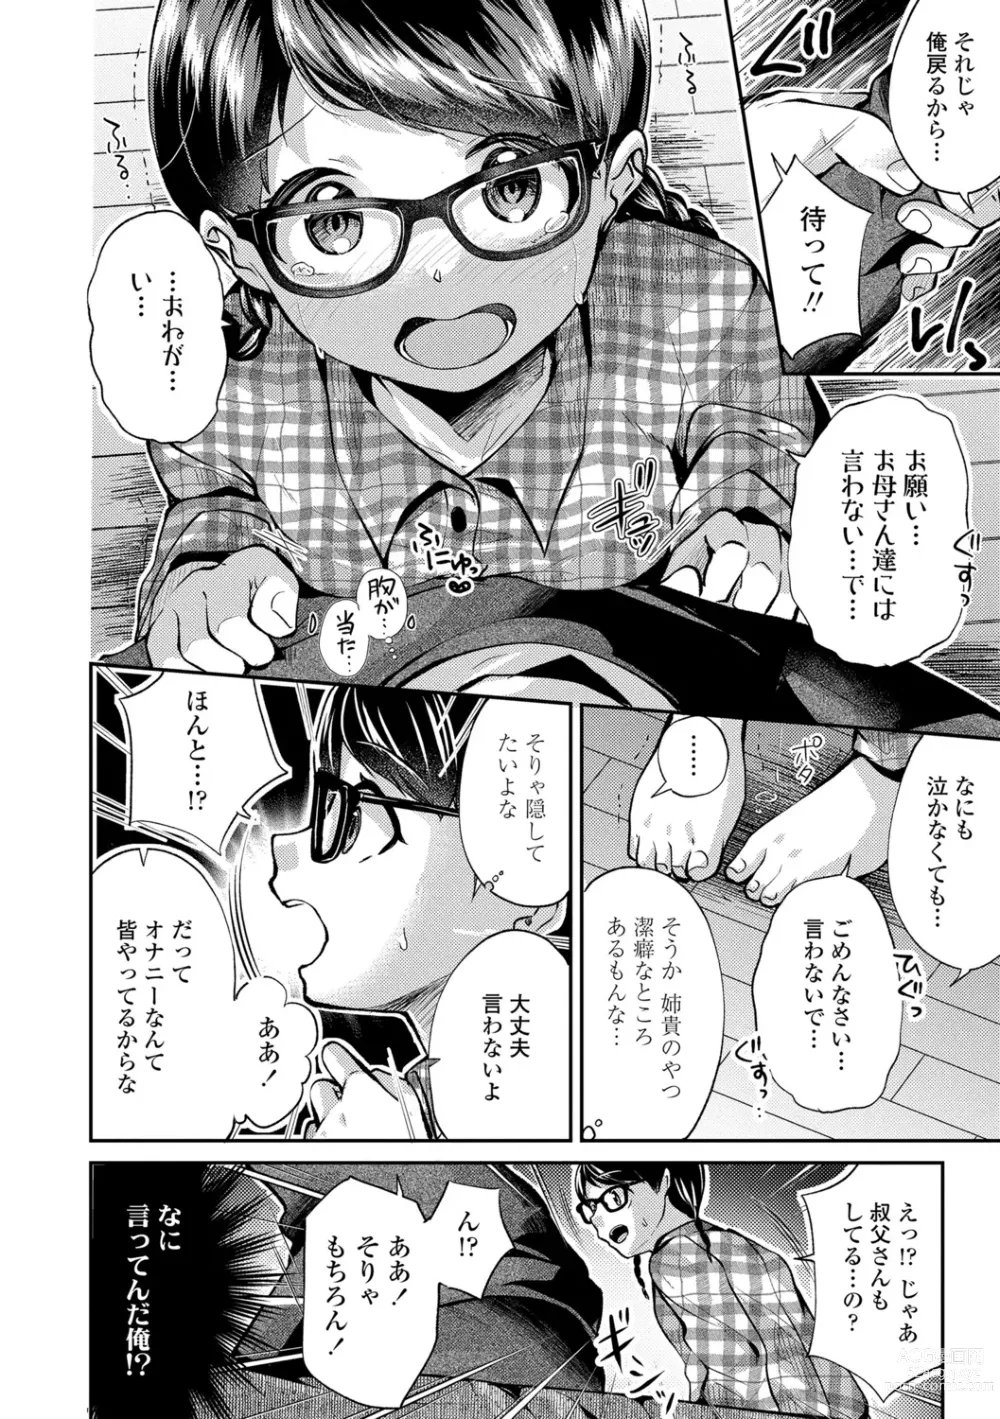 Page 6 of manga Shishunki wa Ichido dake - The one and only adolescence.